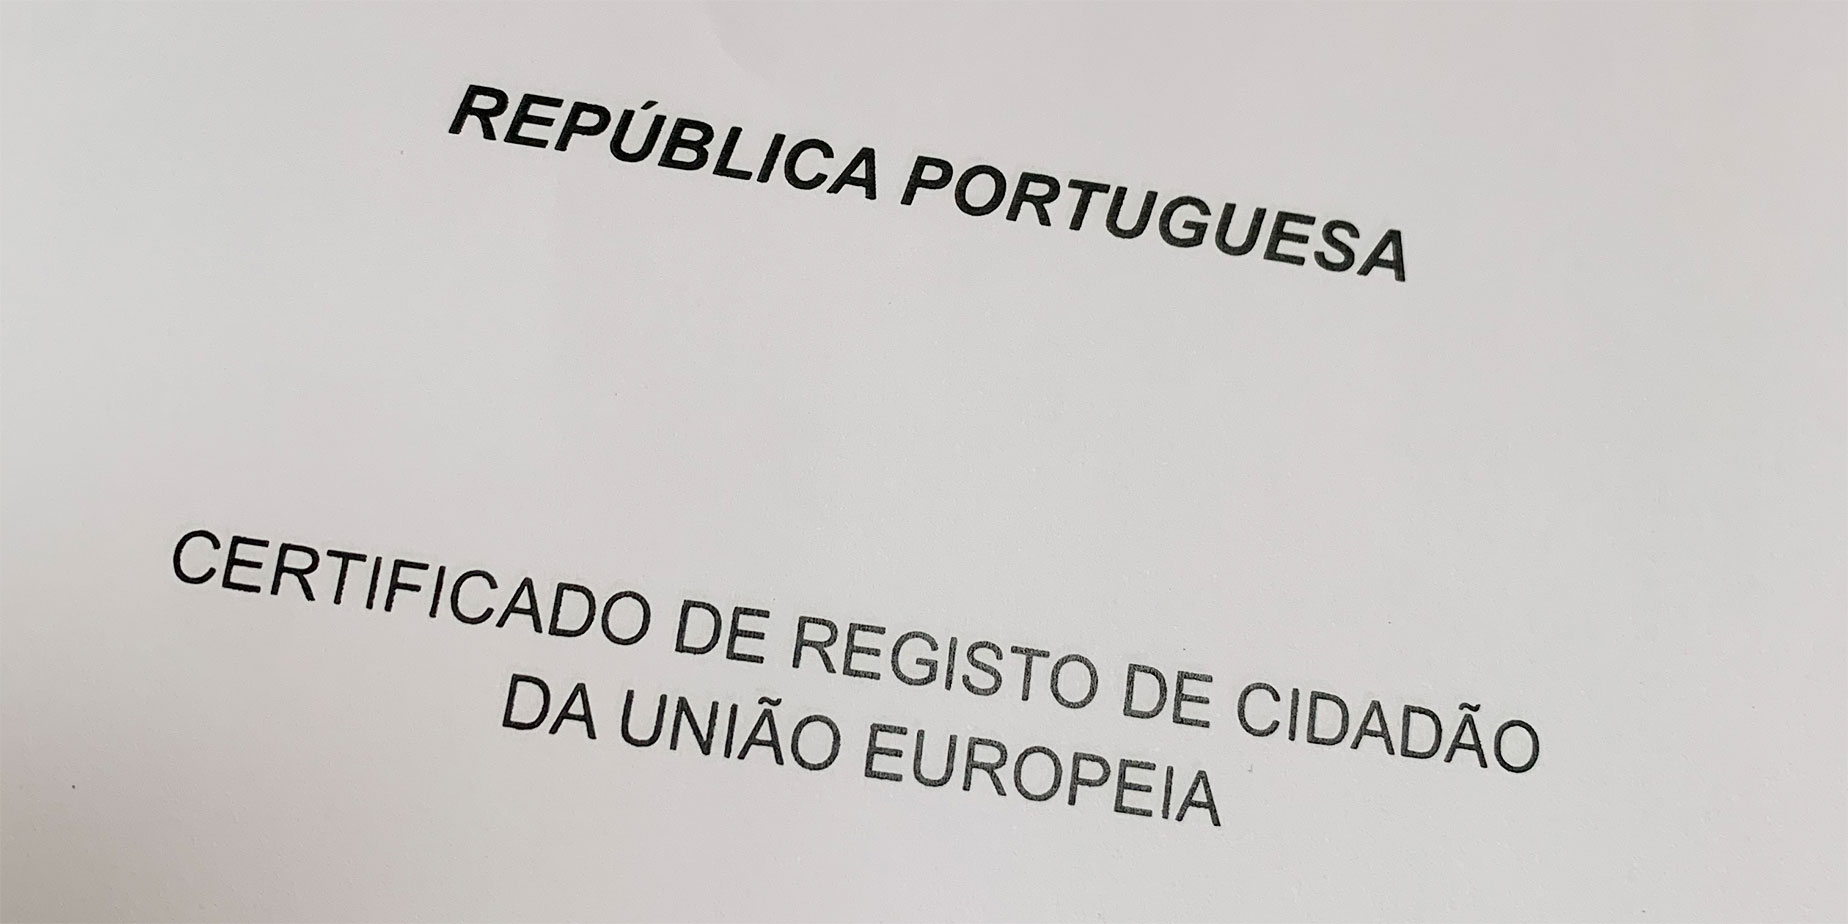 Nu bor vi i Portugal, på riktigt.